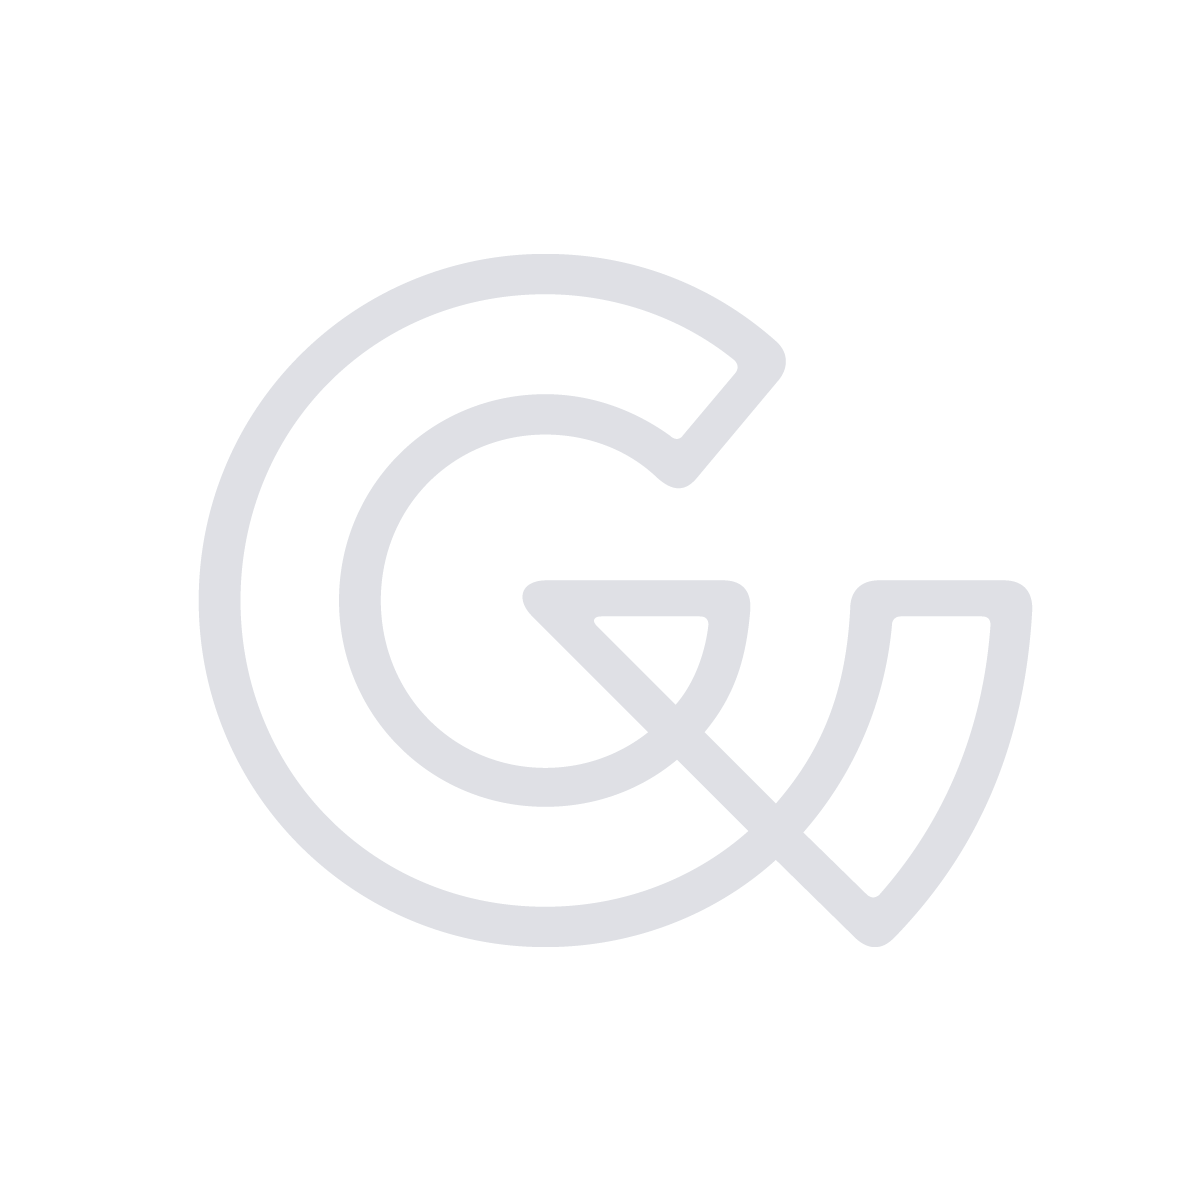 grayscale-logo